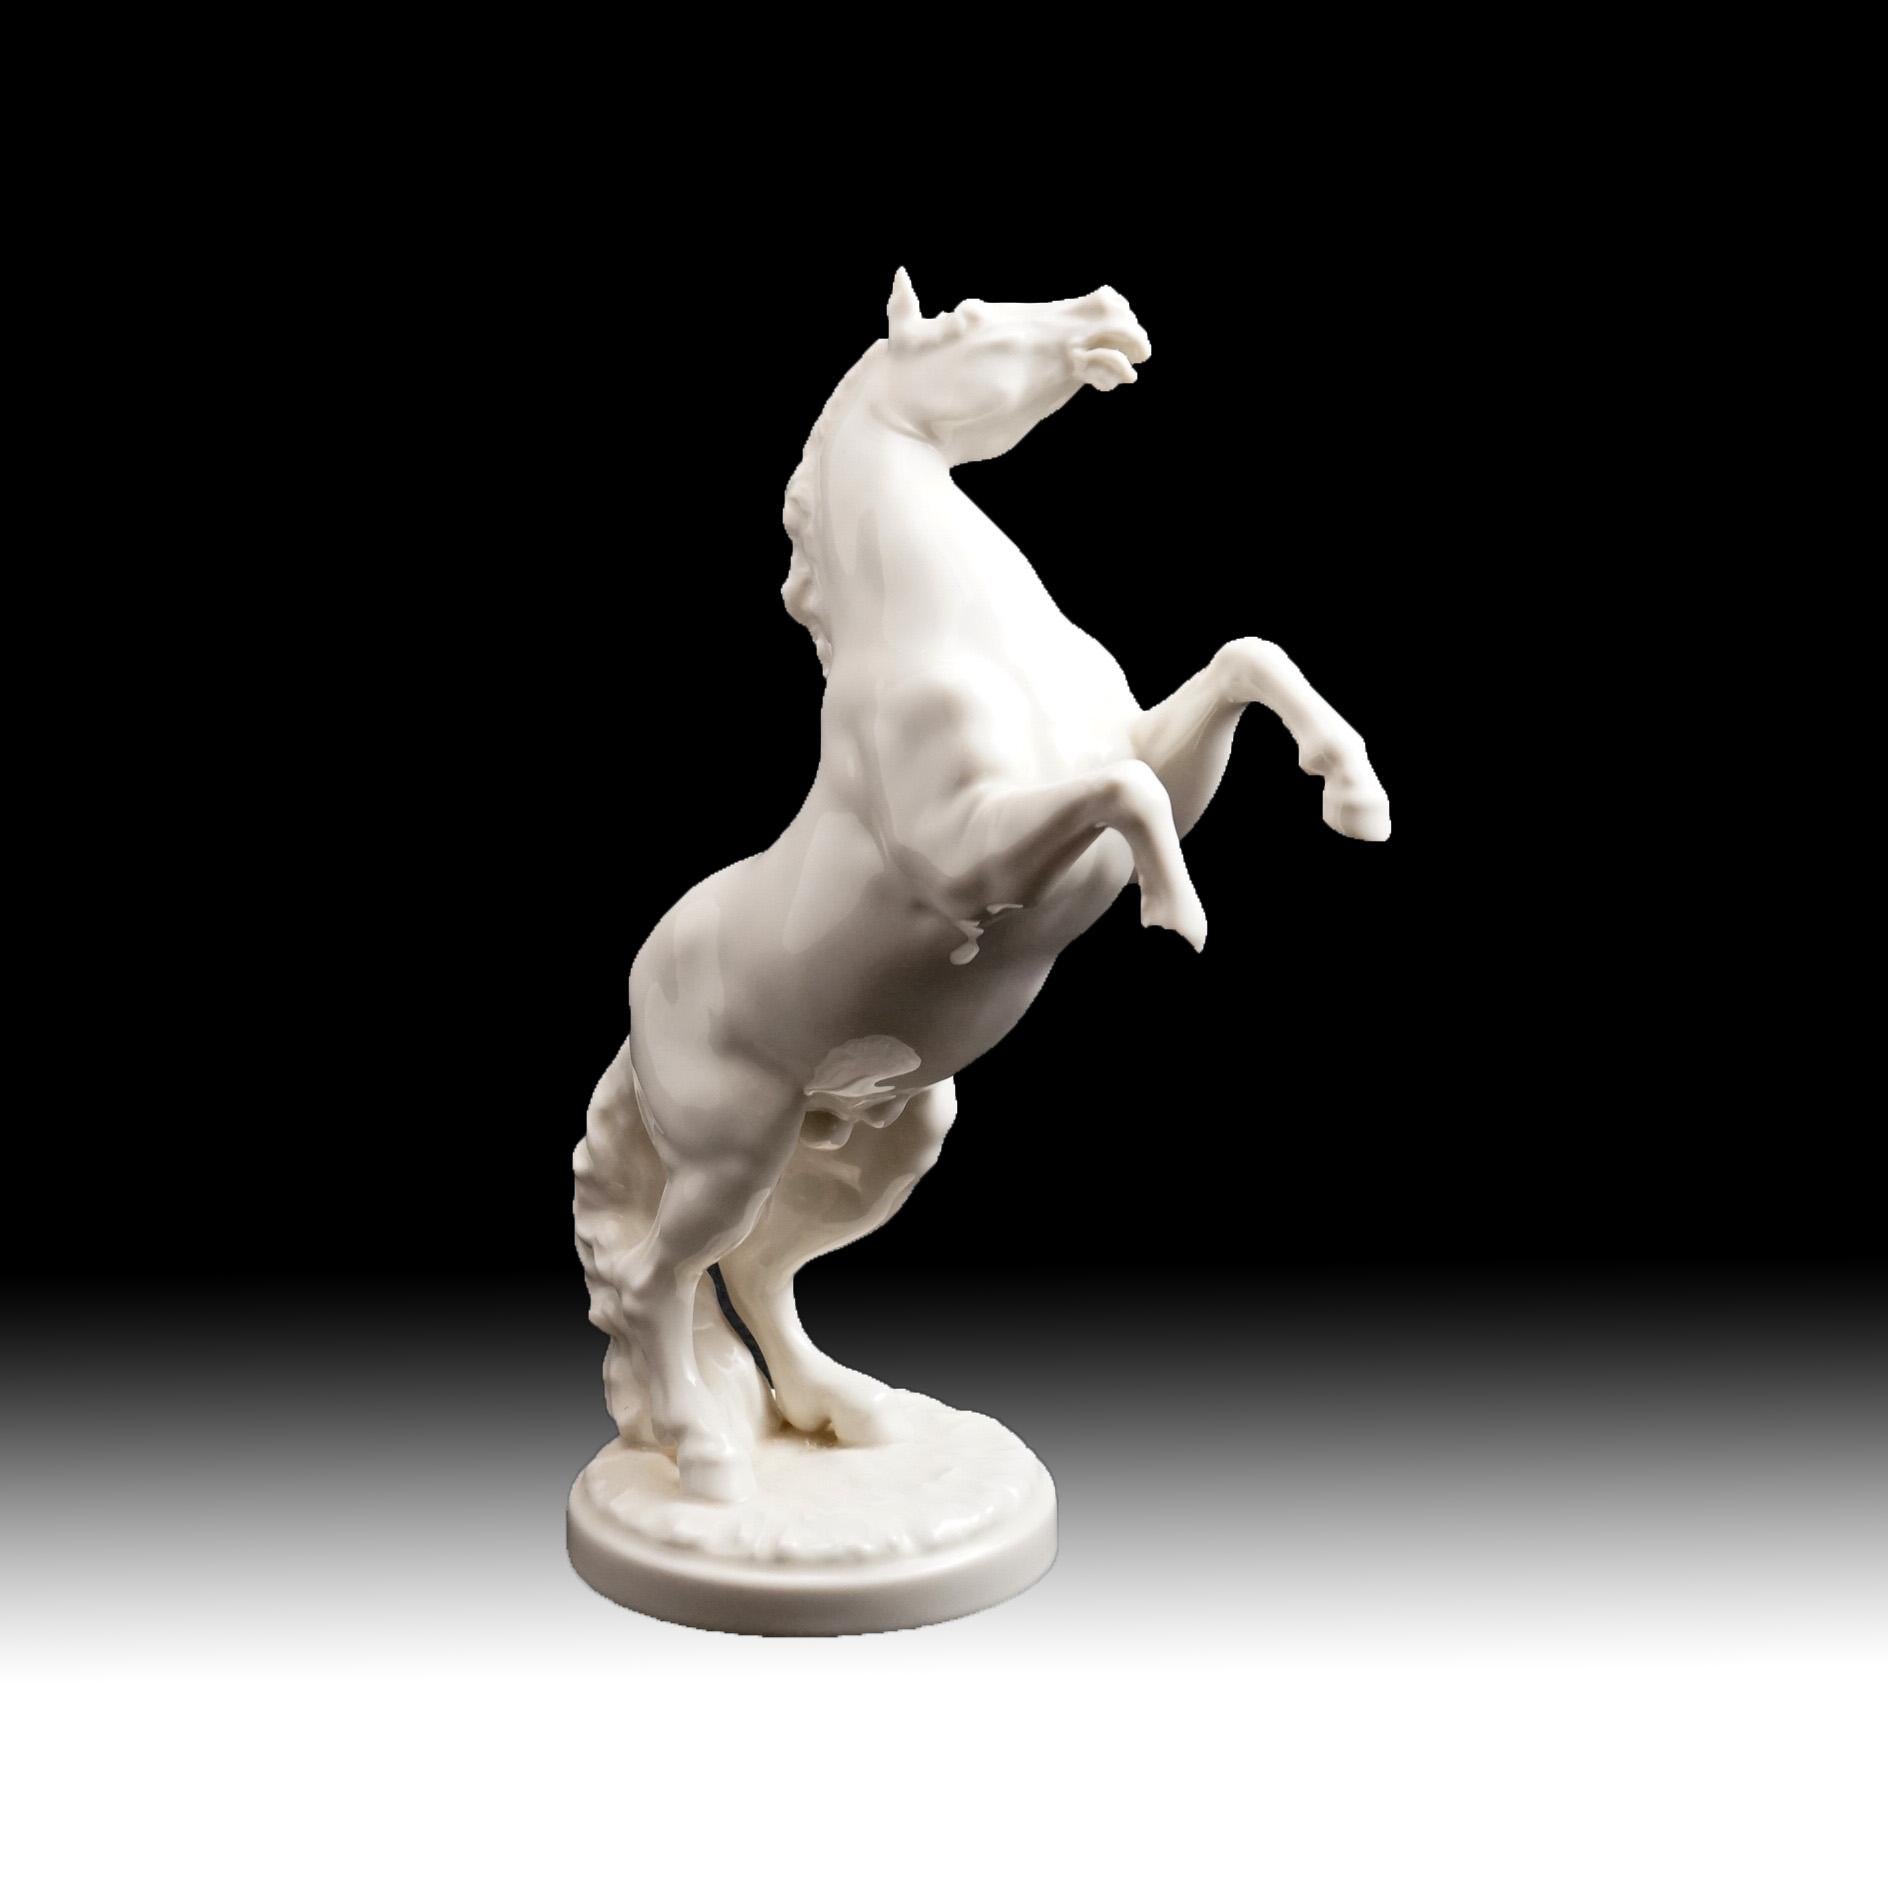 An antique figural German Hutschenreuther figure offers porcelain horse, maker mark on base as photographed, C1930

Measures - 12.75